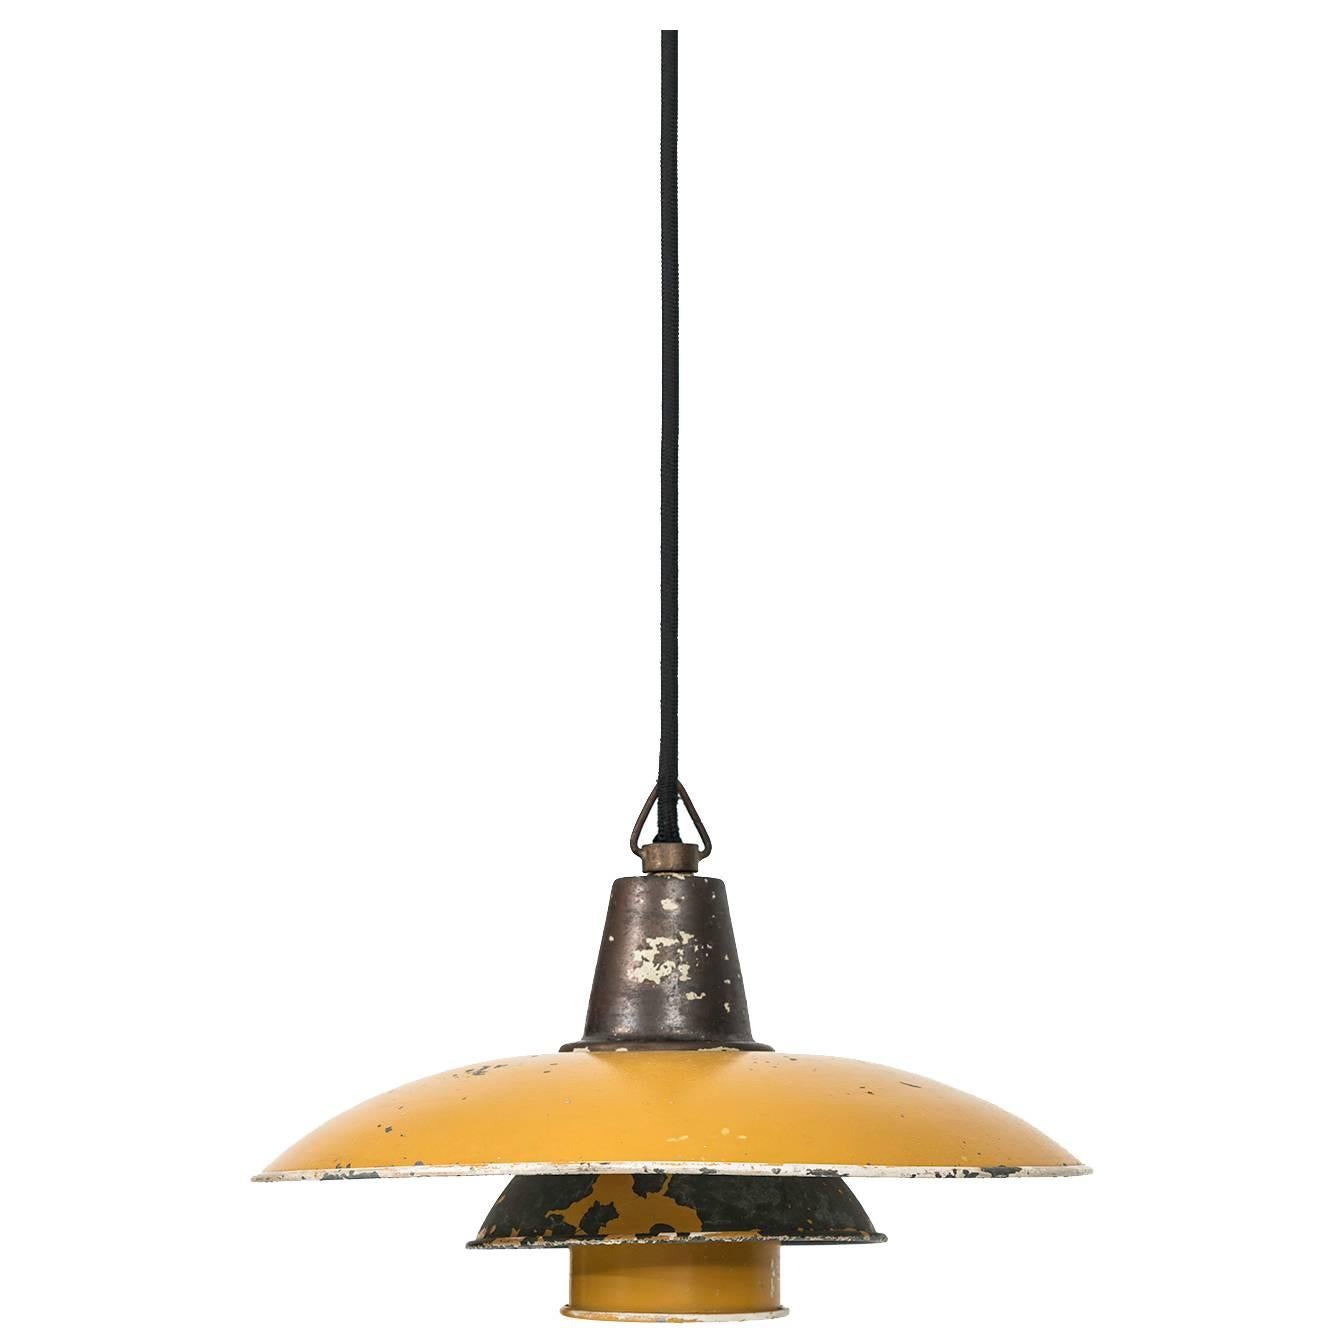 Poul Henningsen Ceiling Lamp Model PH-3/2 Produced by Louis Poulsen in Denmark